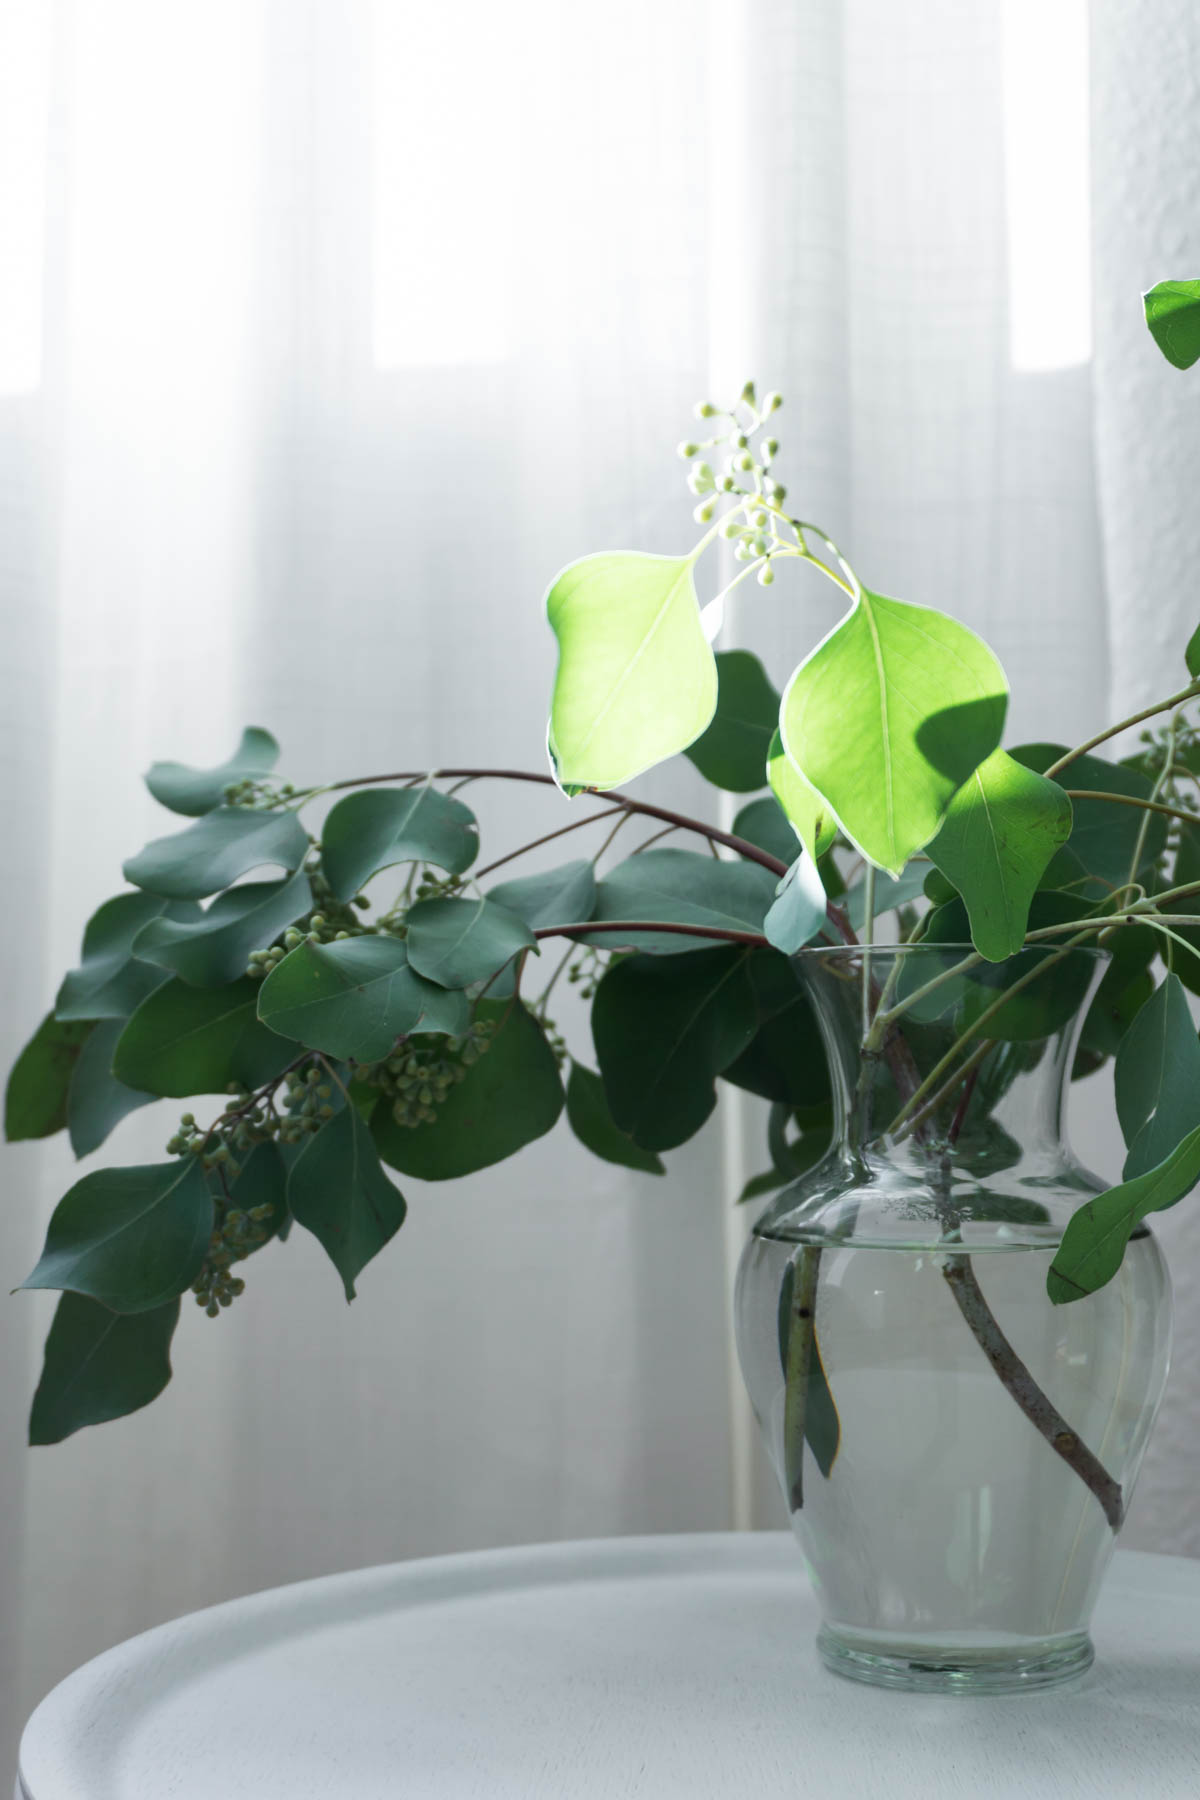 Eucalyptus - Minimalist Bedroom, Scandinavian Design, Calming Interior // RG Daily Blog